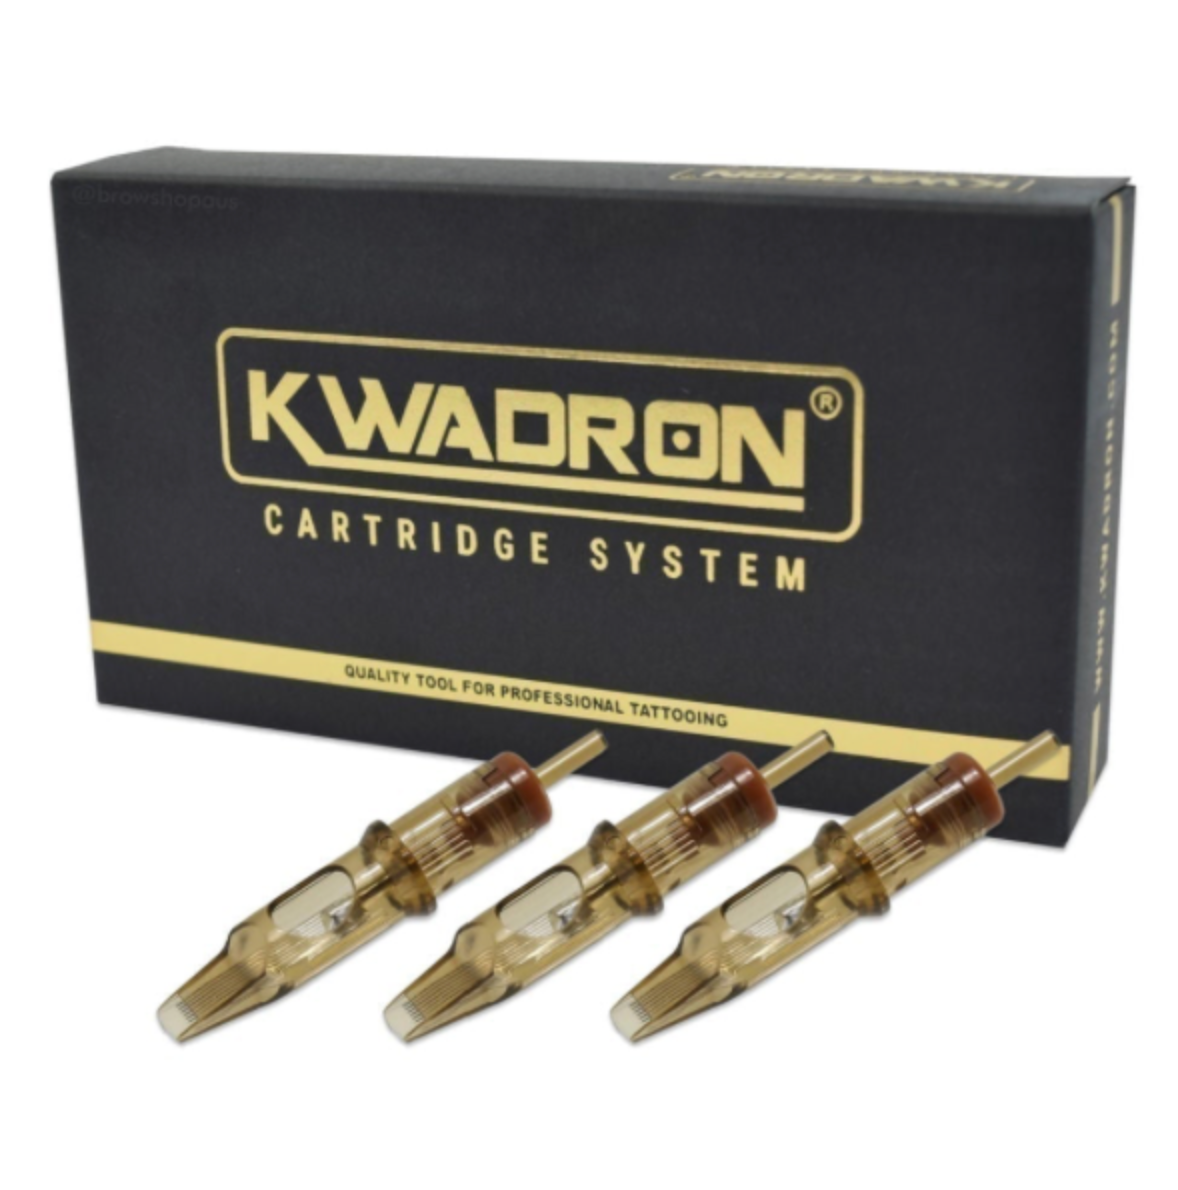 Kwadron Cartridge Needles - 3 Super Tight Liner Long Taper - 25/3RLLT